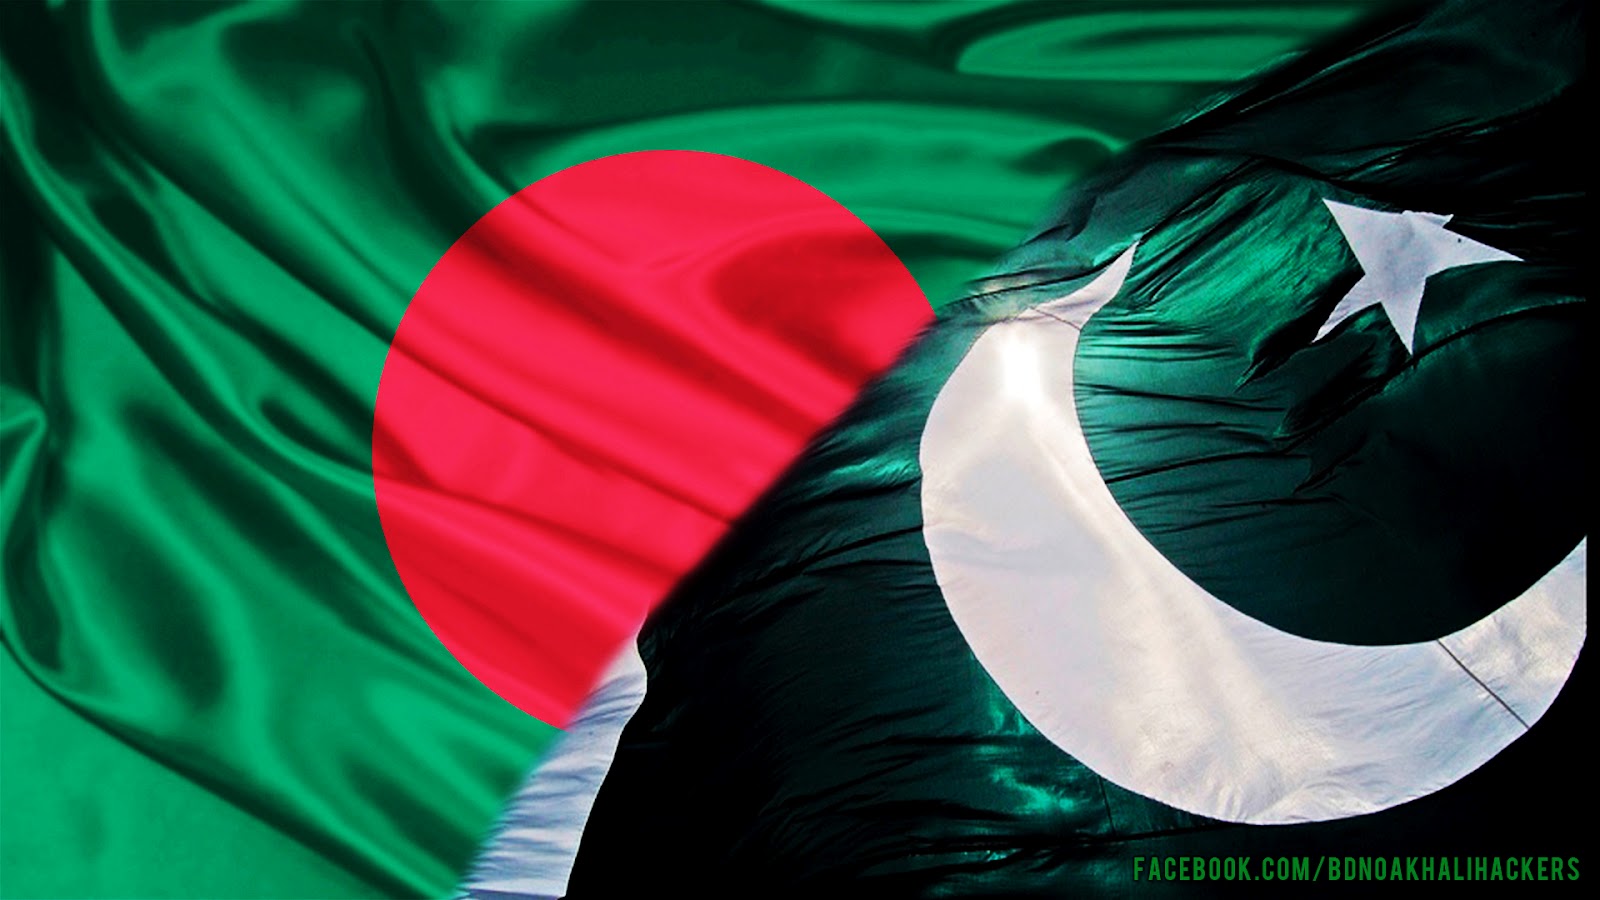 bangladesh flag wallpaper hd,verde,rosso,bandiera,tessile,fotografia